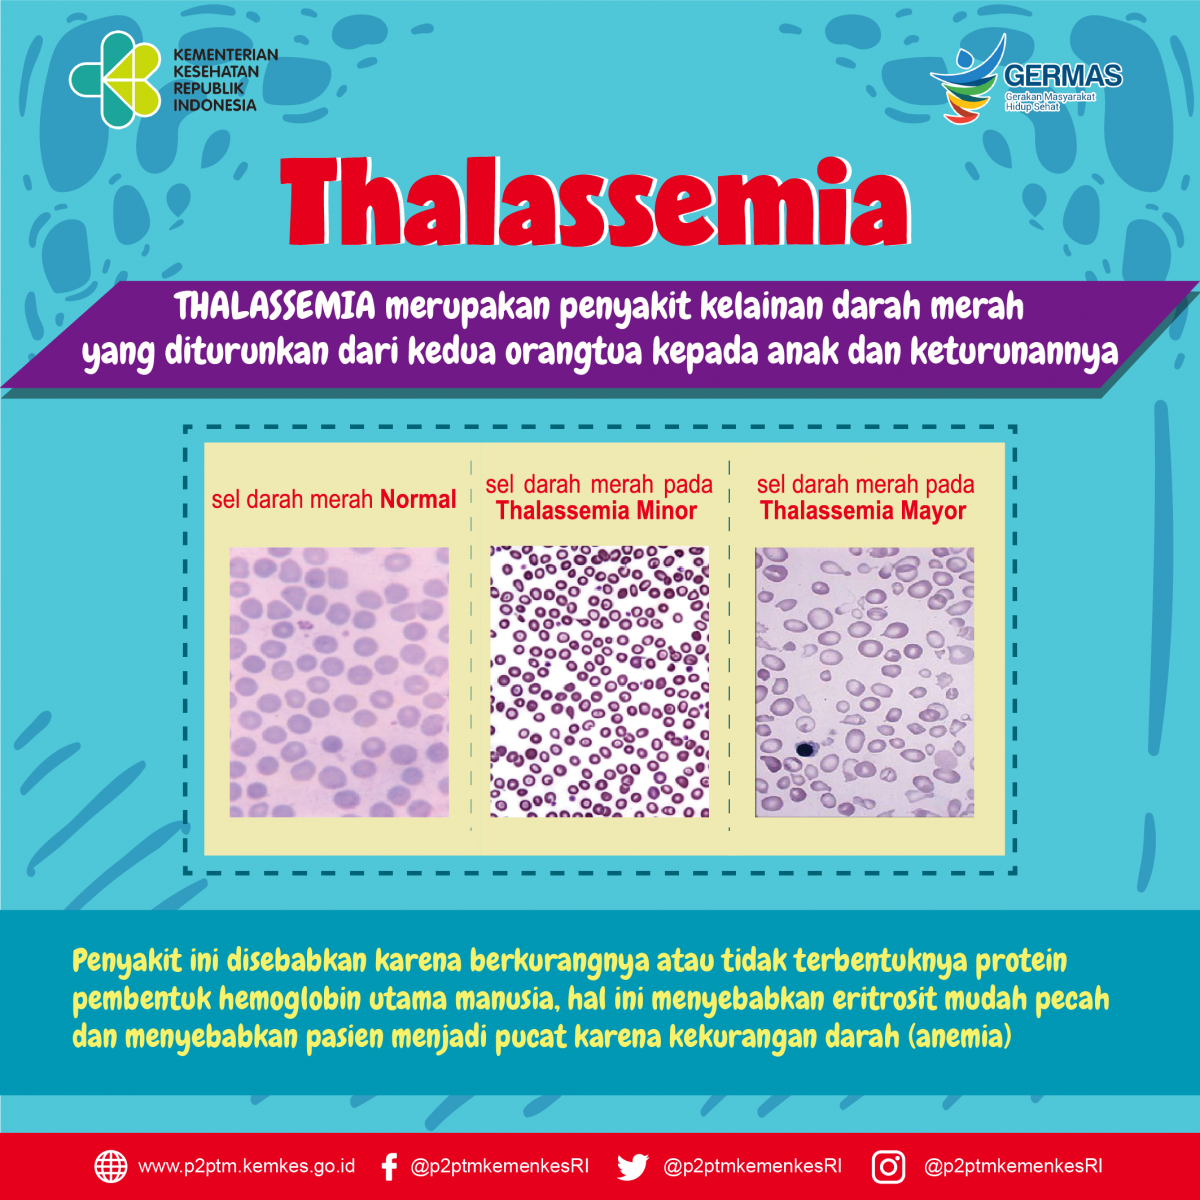 Apa itu Thalassemia ?